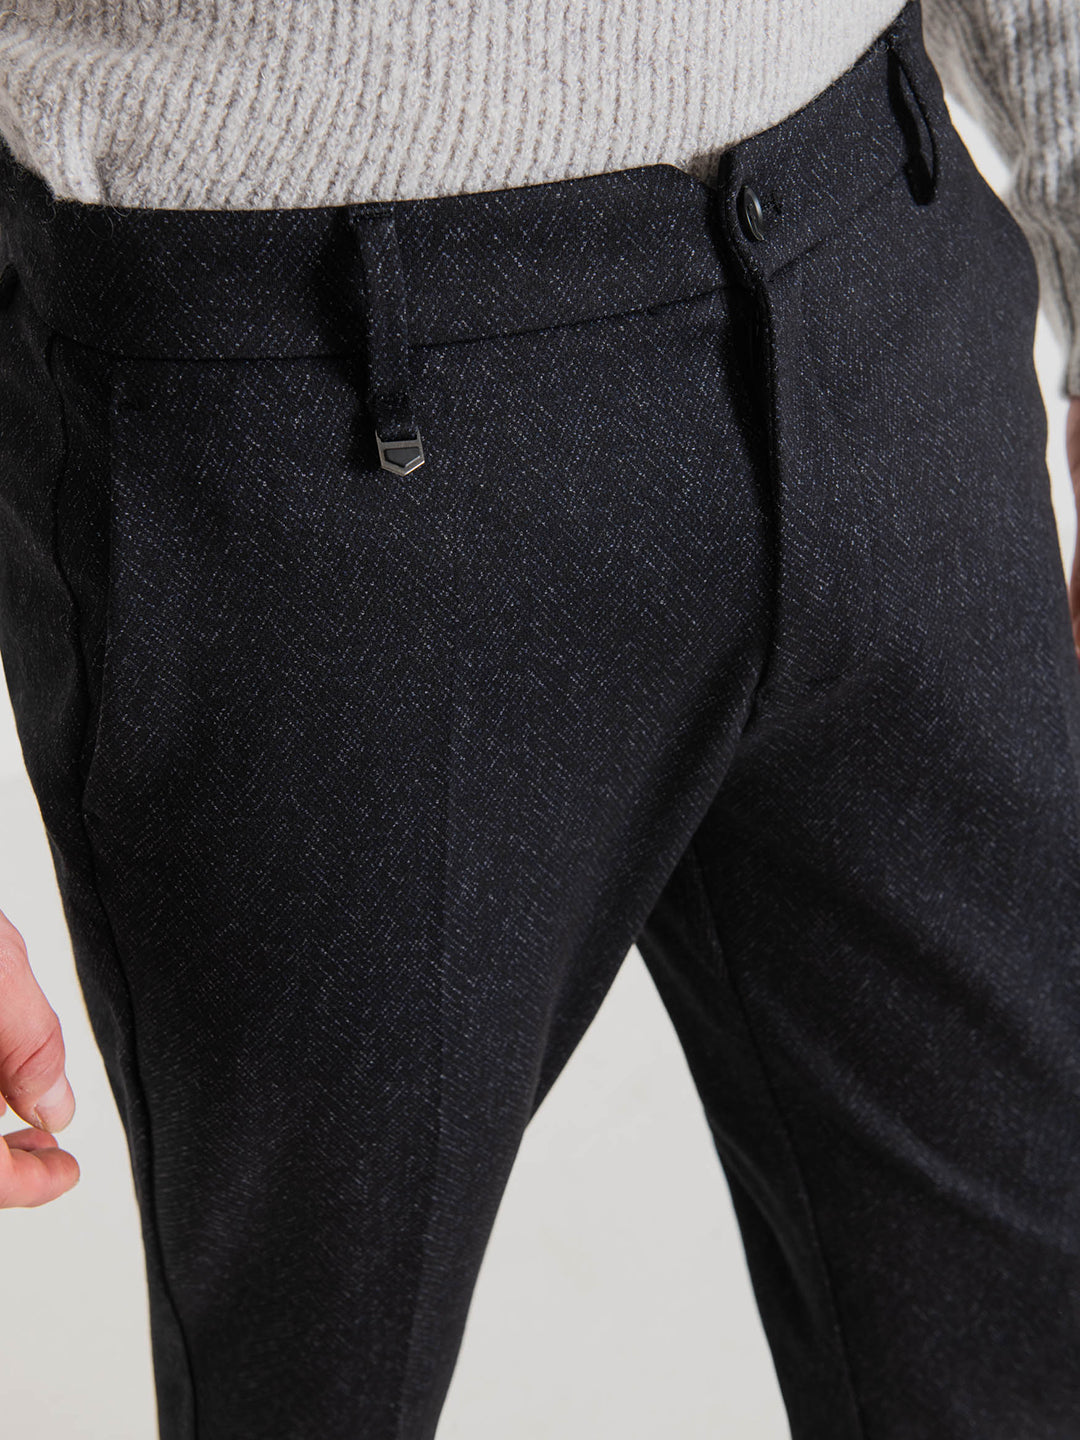 Bnwt Mens trousers -- W36 r -- Super Skinny Fit Light Grey | eBay